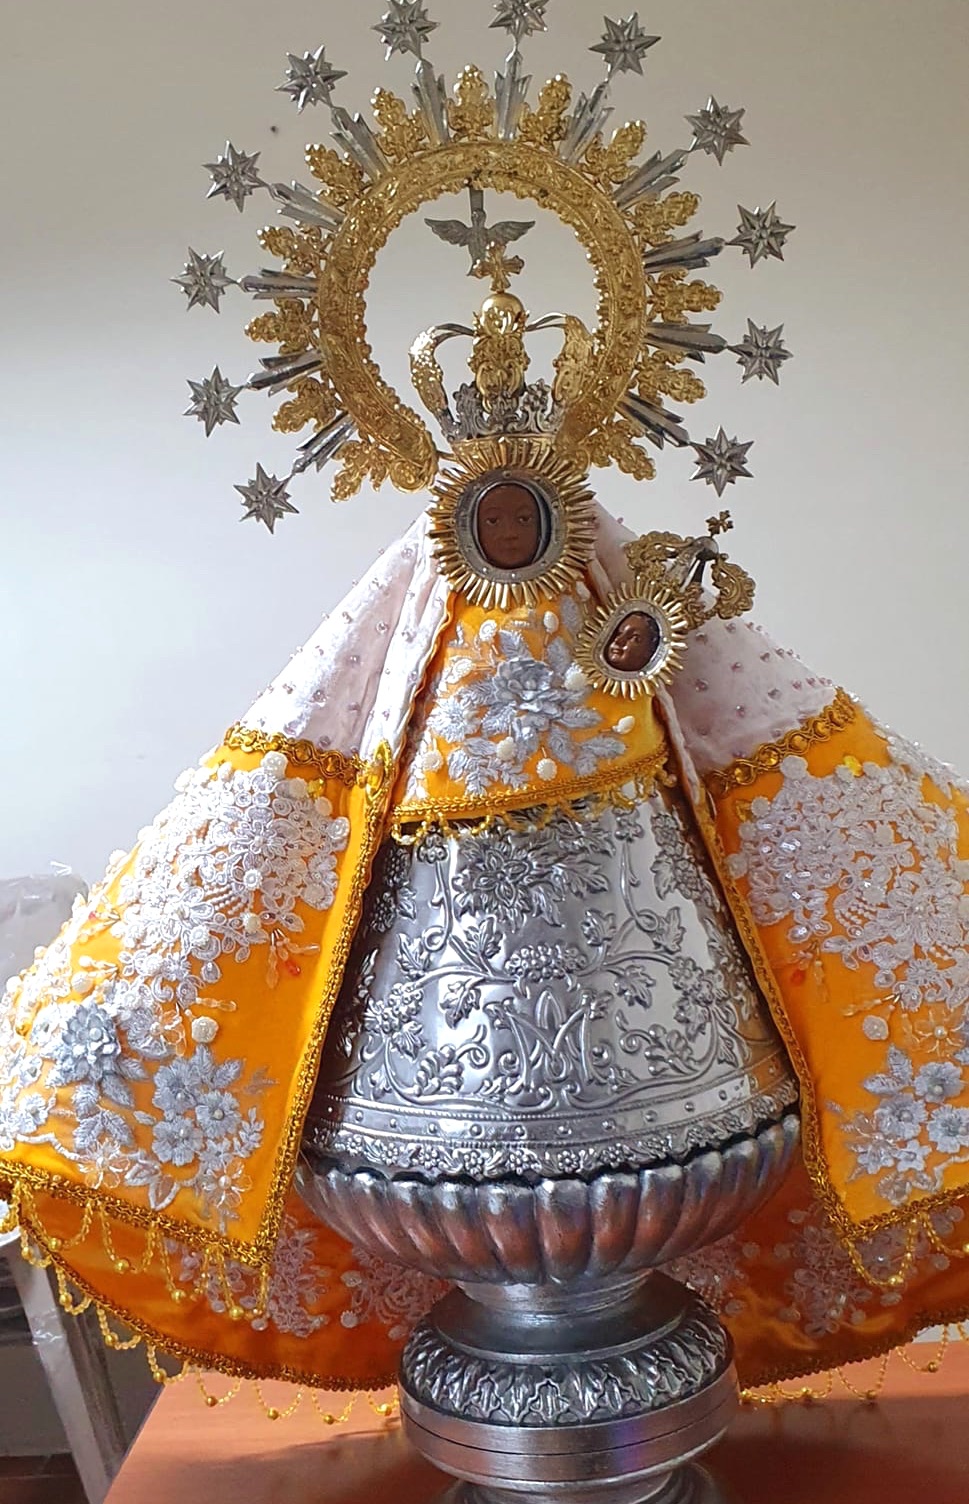 The pilgrim image of Our Lady of Peñafrancia